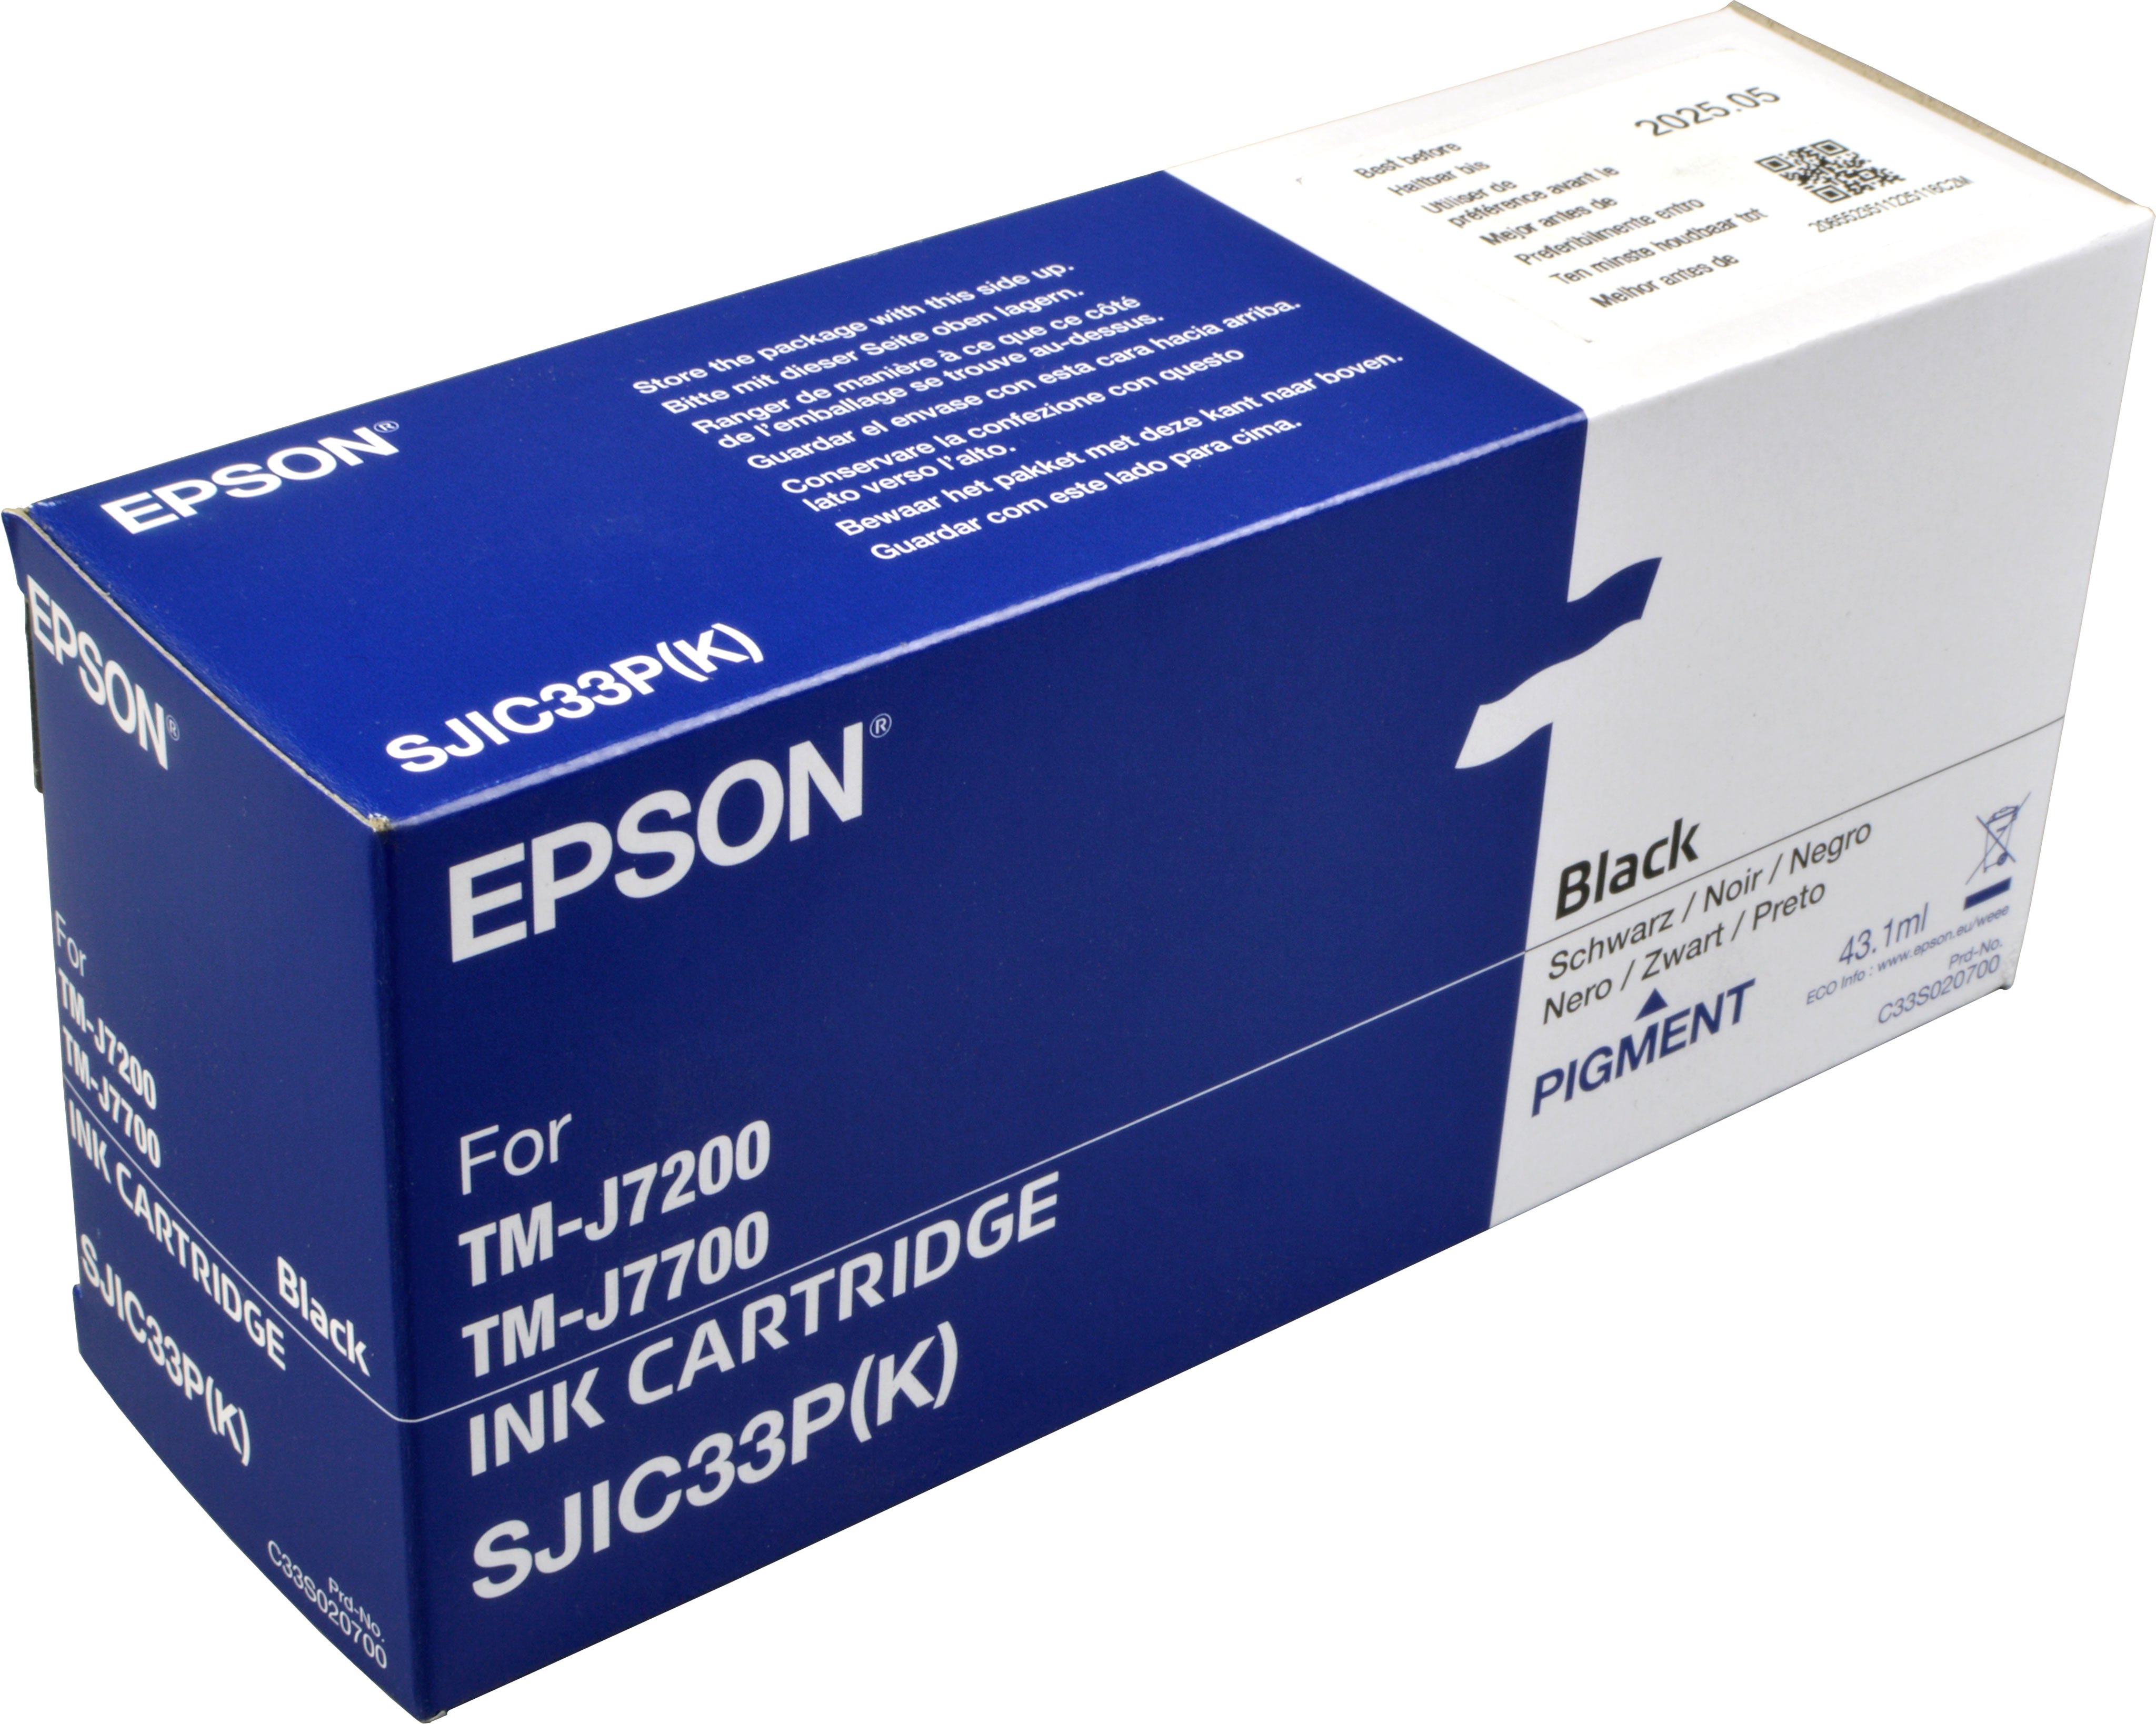 Epson Tinte C33S020700  SJIC33P(K)  schwarz